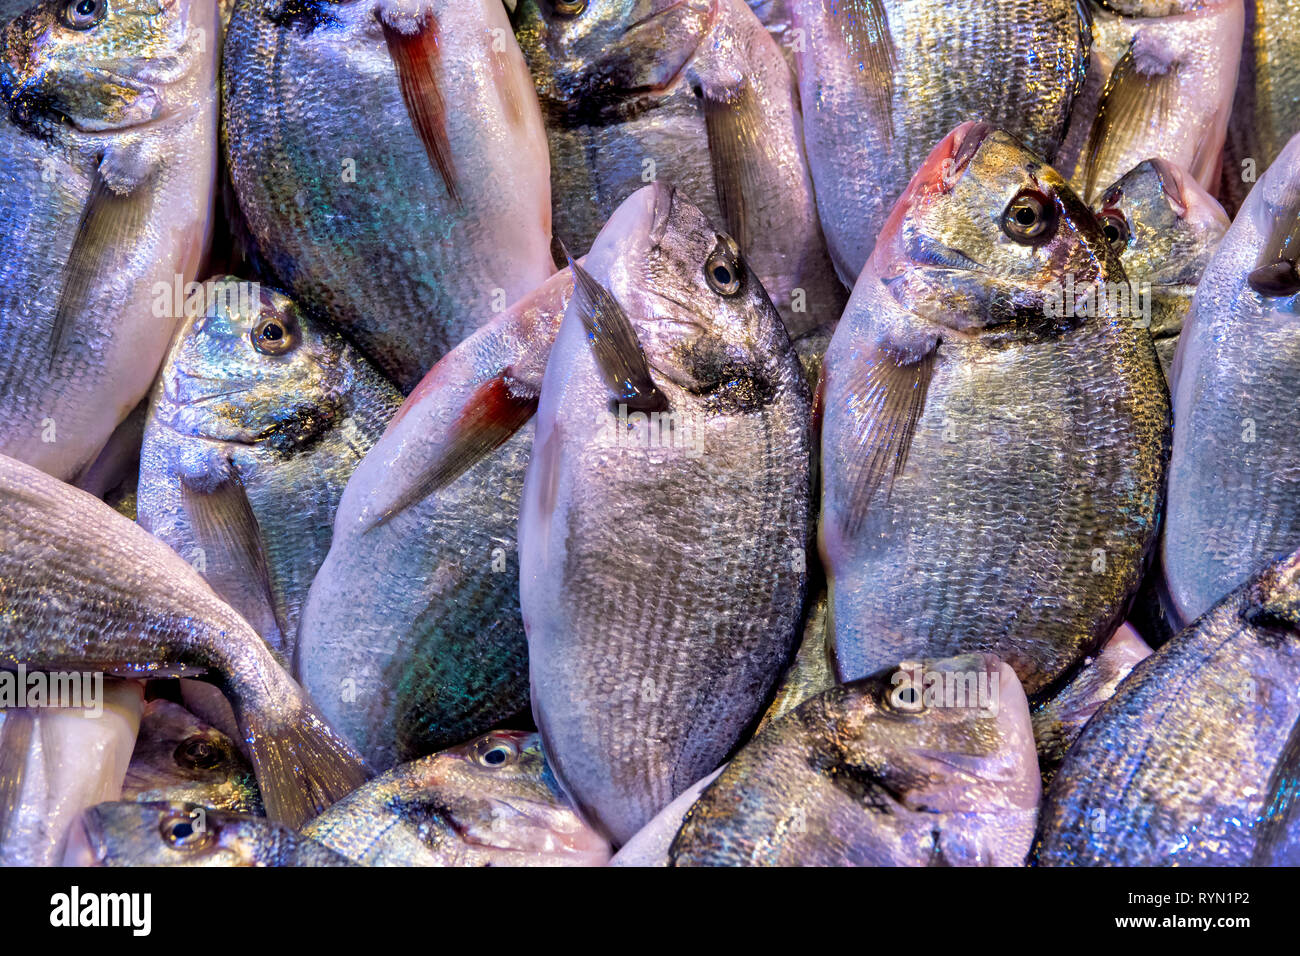 Orata orate sul display nel mercato del pesce in Kemeraltı bazaar, Izmir, Turchia Foto Stock